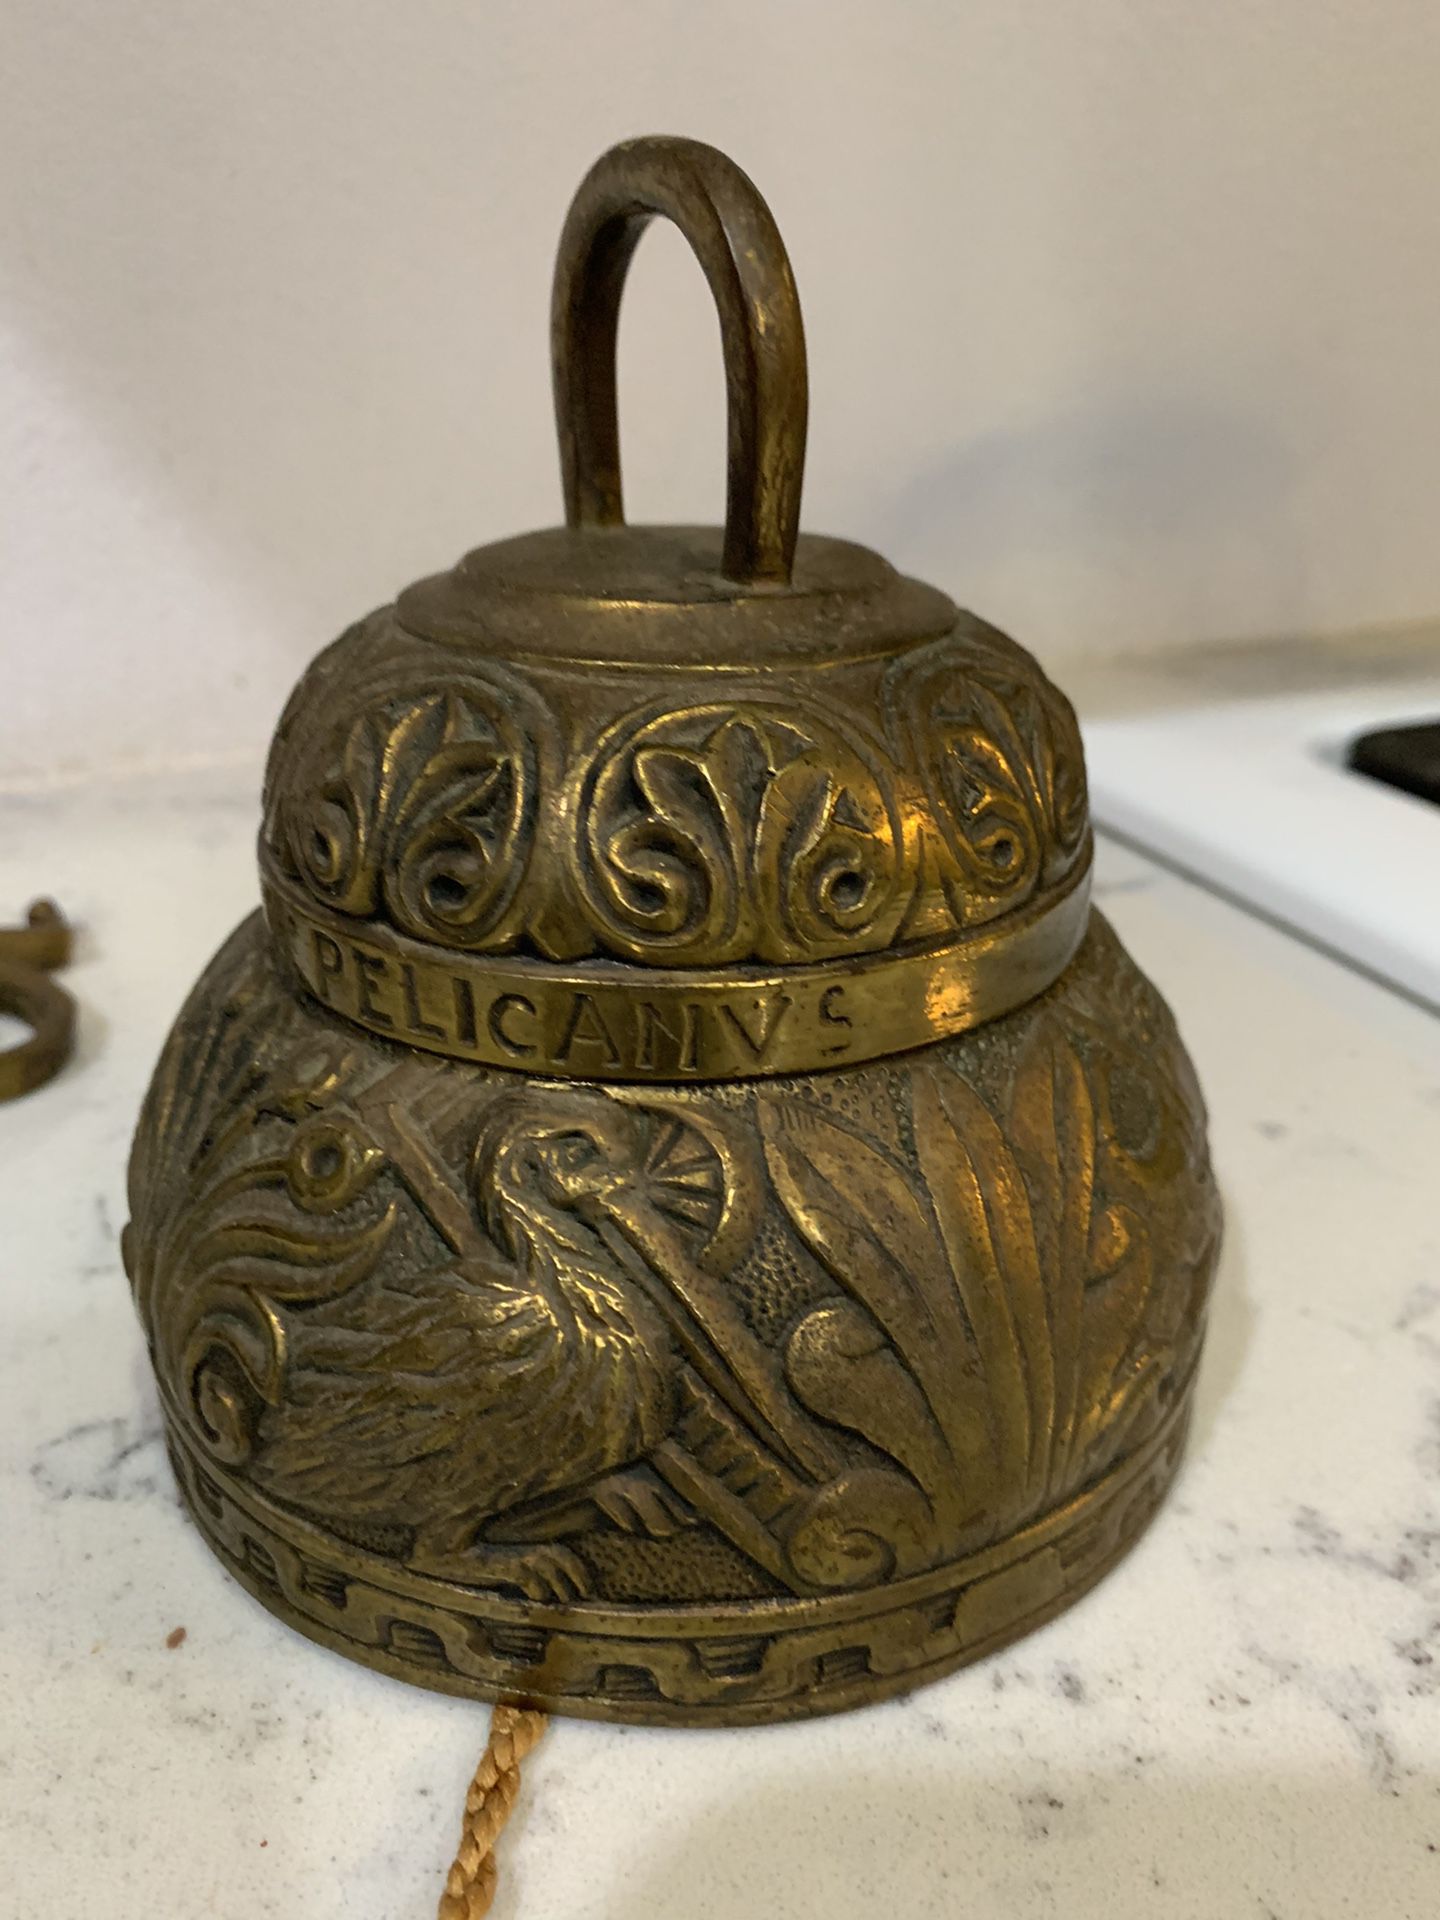 Vintage Brass Sanctuary Bell LEO X AQVILA AGNVS X PELICANVS England - Bracket